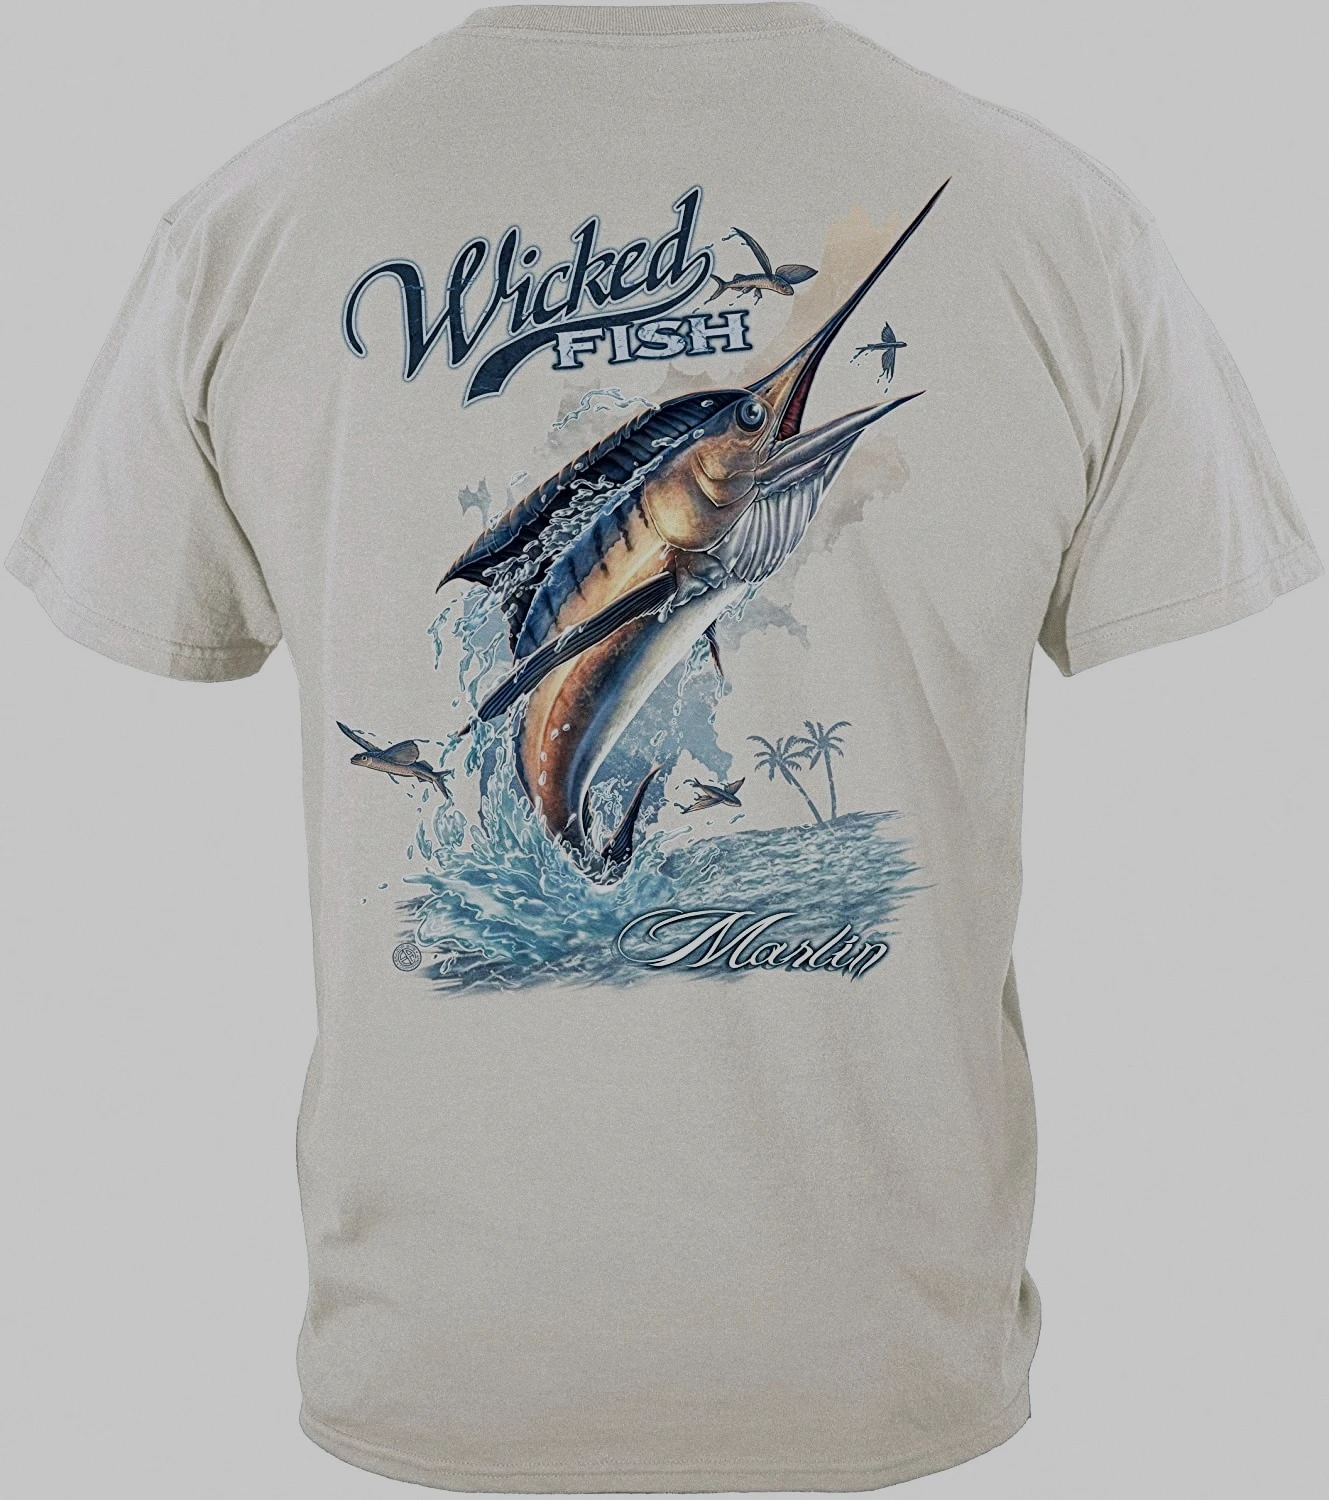 https://ae01.alicdn.com/kf/S1e402b9bb81c4956acb8fab7d51f9f63R/Unique-Marlin-Graphic-Fashion-Fishing-Fisherman-Angler-Gift-T-Shirt-Summer-Cotton-O-Neck-Short-Sleeve.jpg